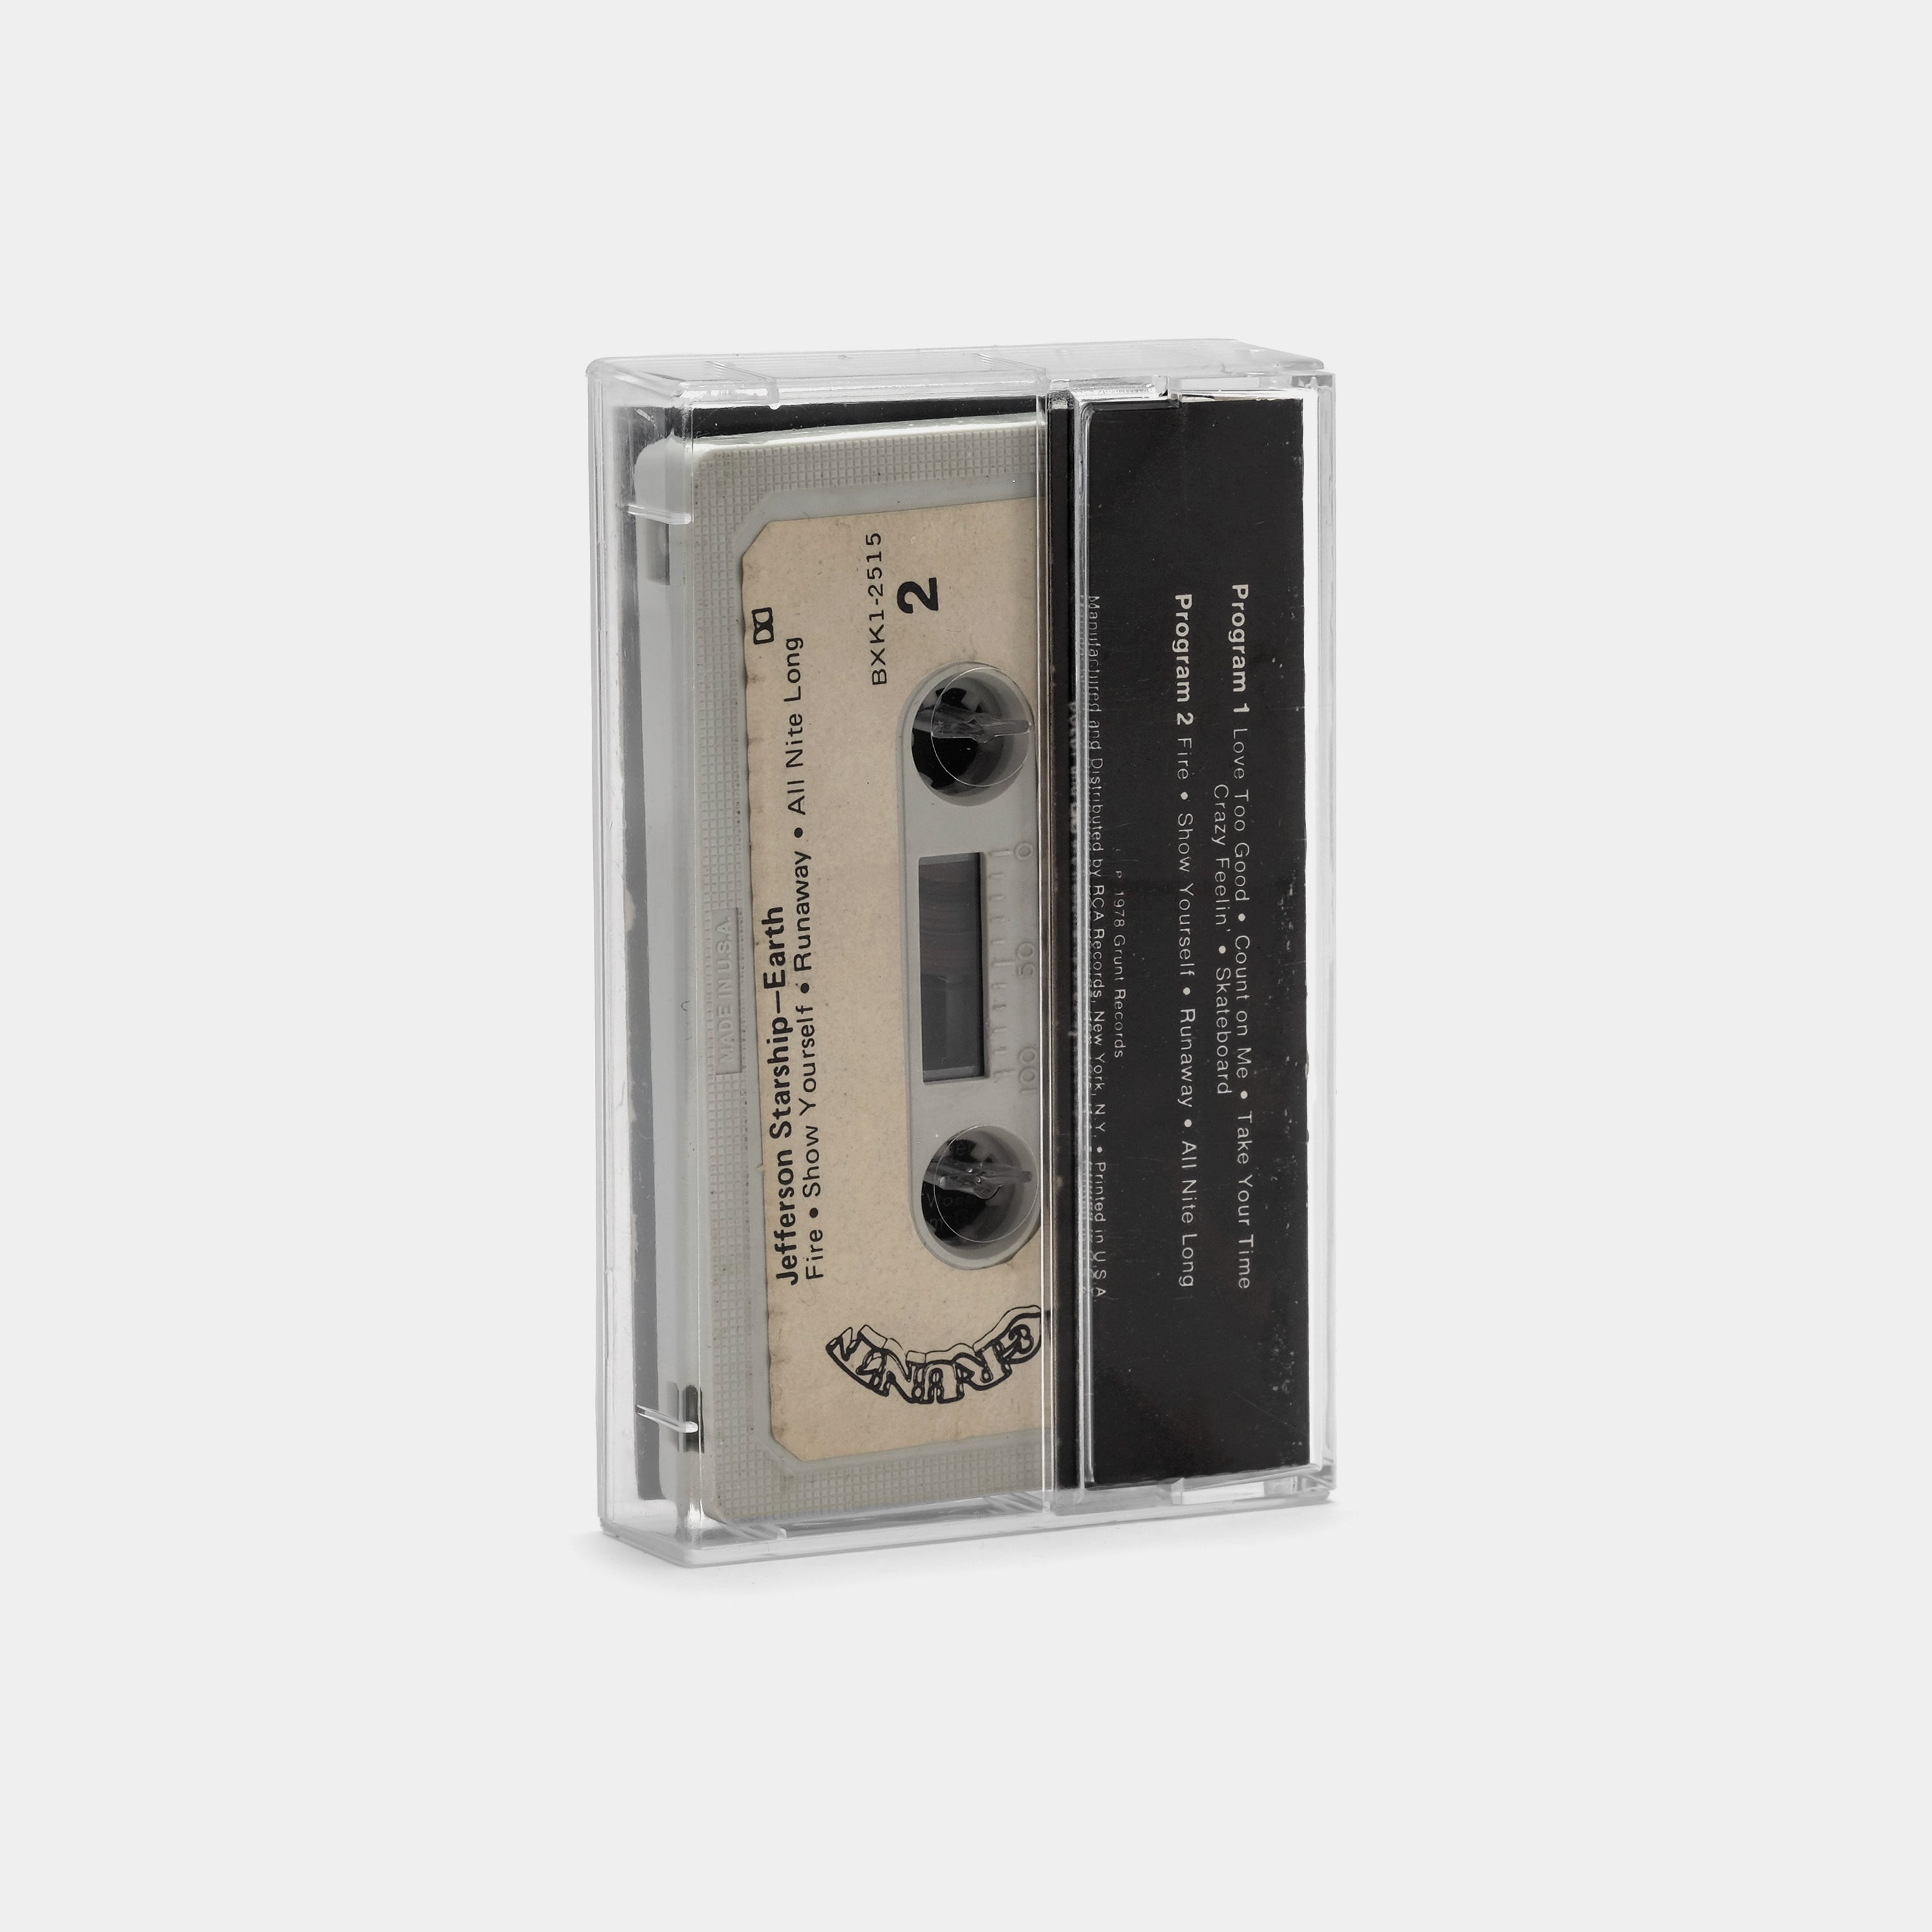 Jefferson Starship - Earth Cassette Tape